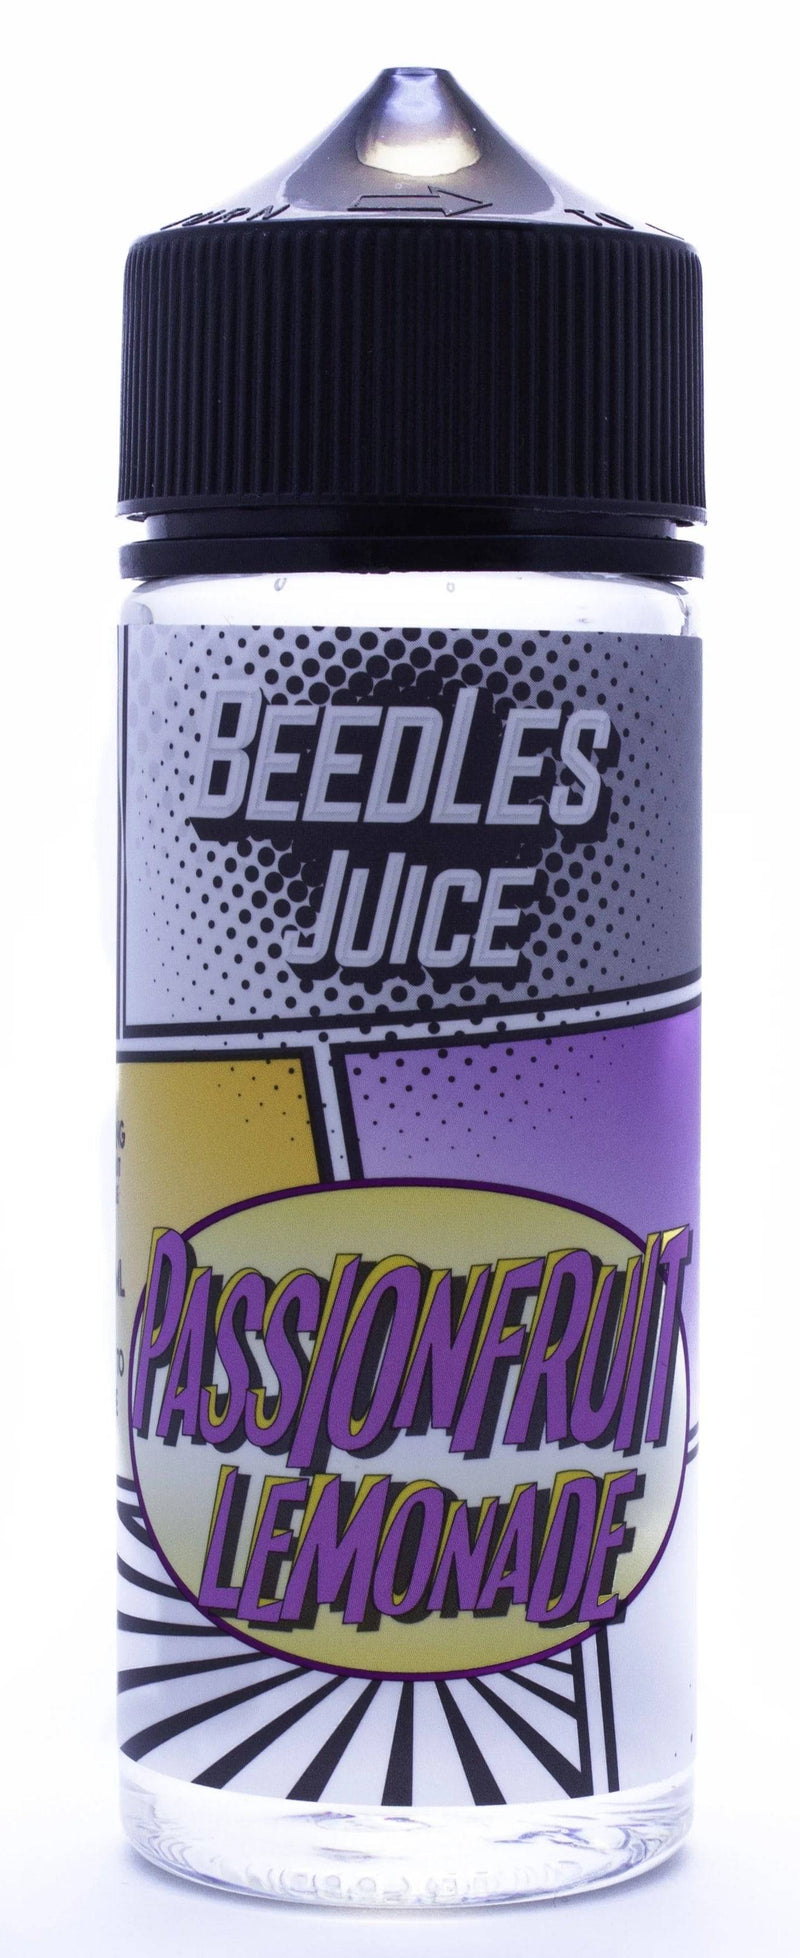 Beedlesjuice - Passionfruit Lemonade - Super Vape Store